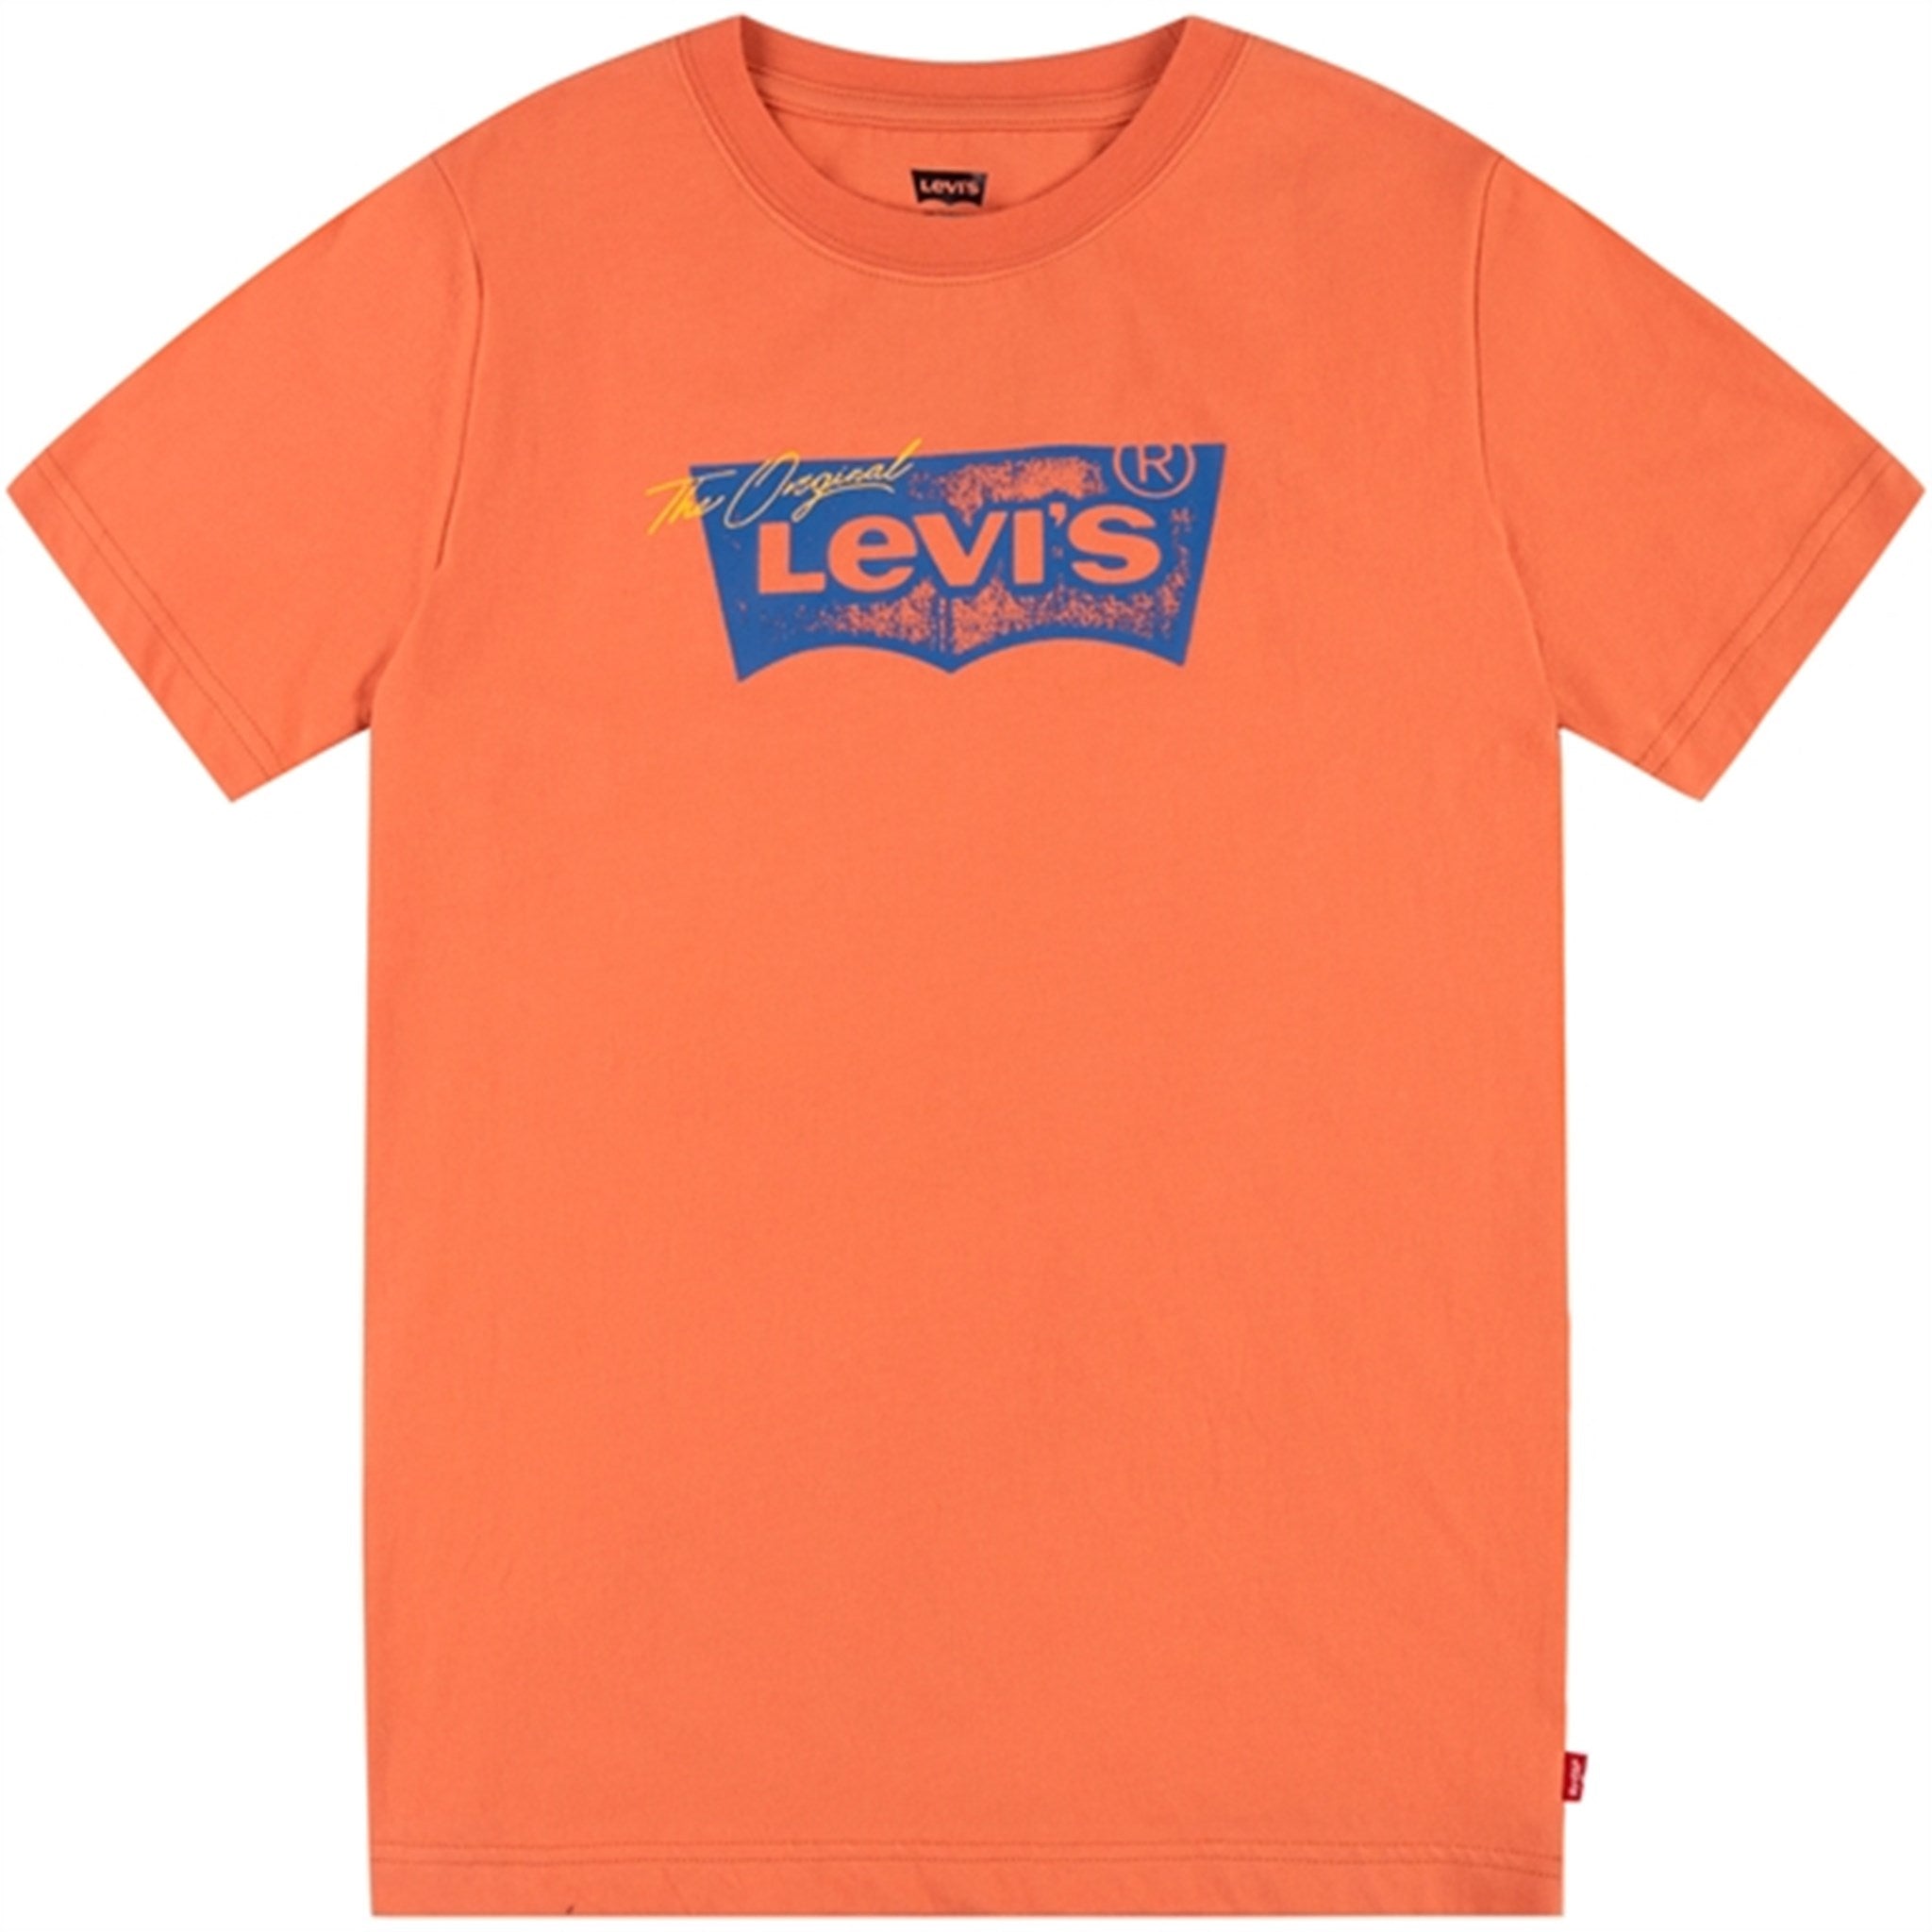 Levi's Distressed Batwing T-shirt Orange